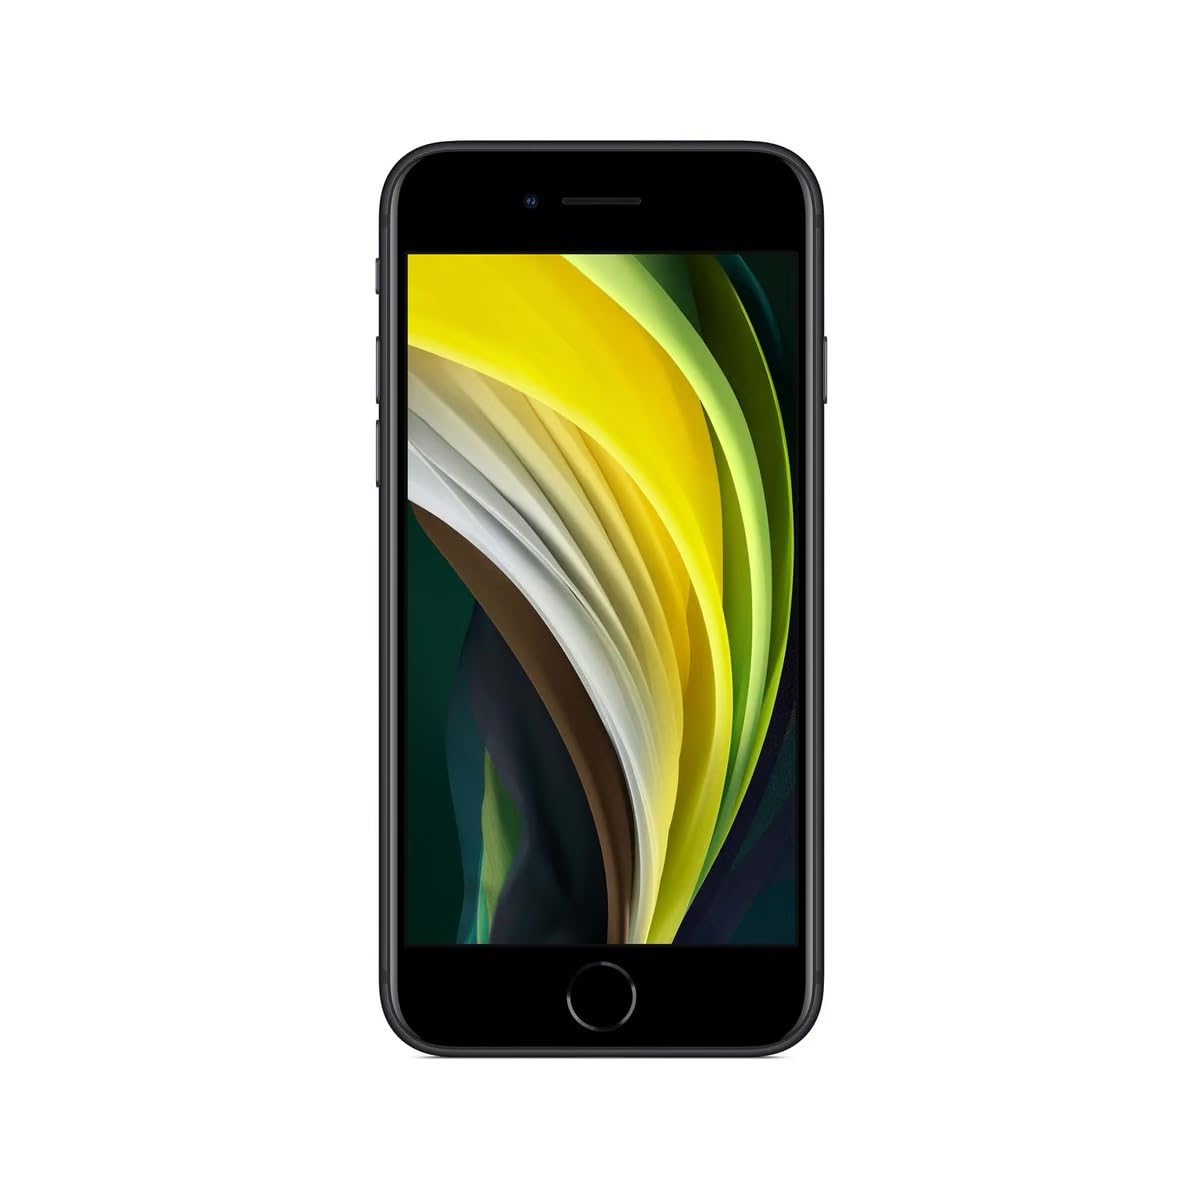 Refurbished Apple iPhone SE 2 - Black - 64GB - Refurbished As New with 1 Year Warranty (64GB, Black)